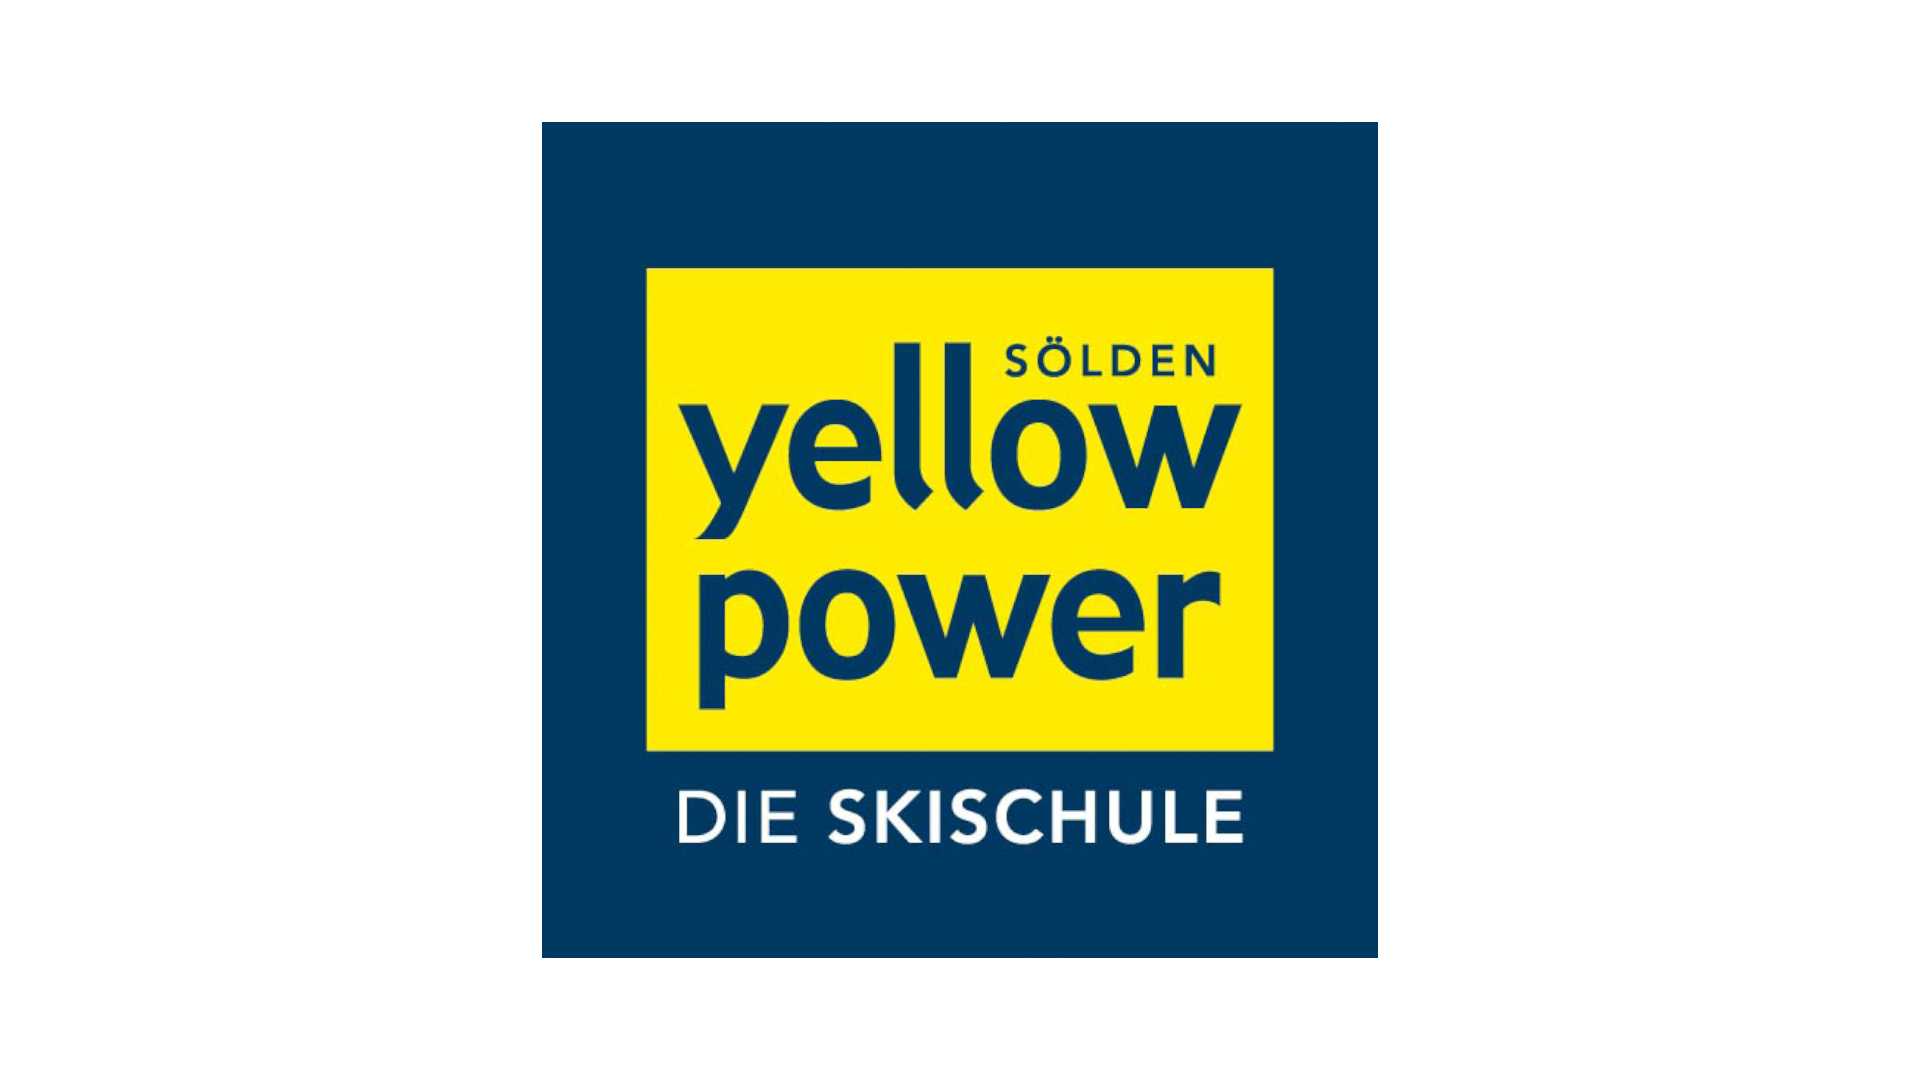 Skischule Yellow Power